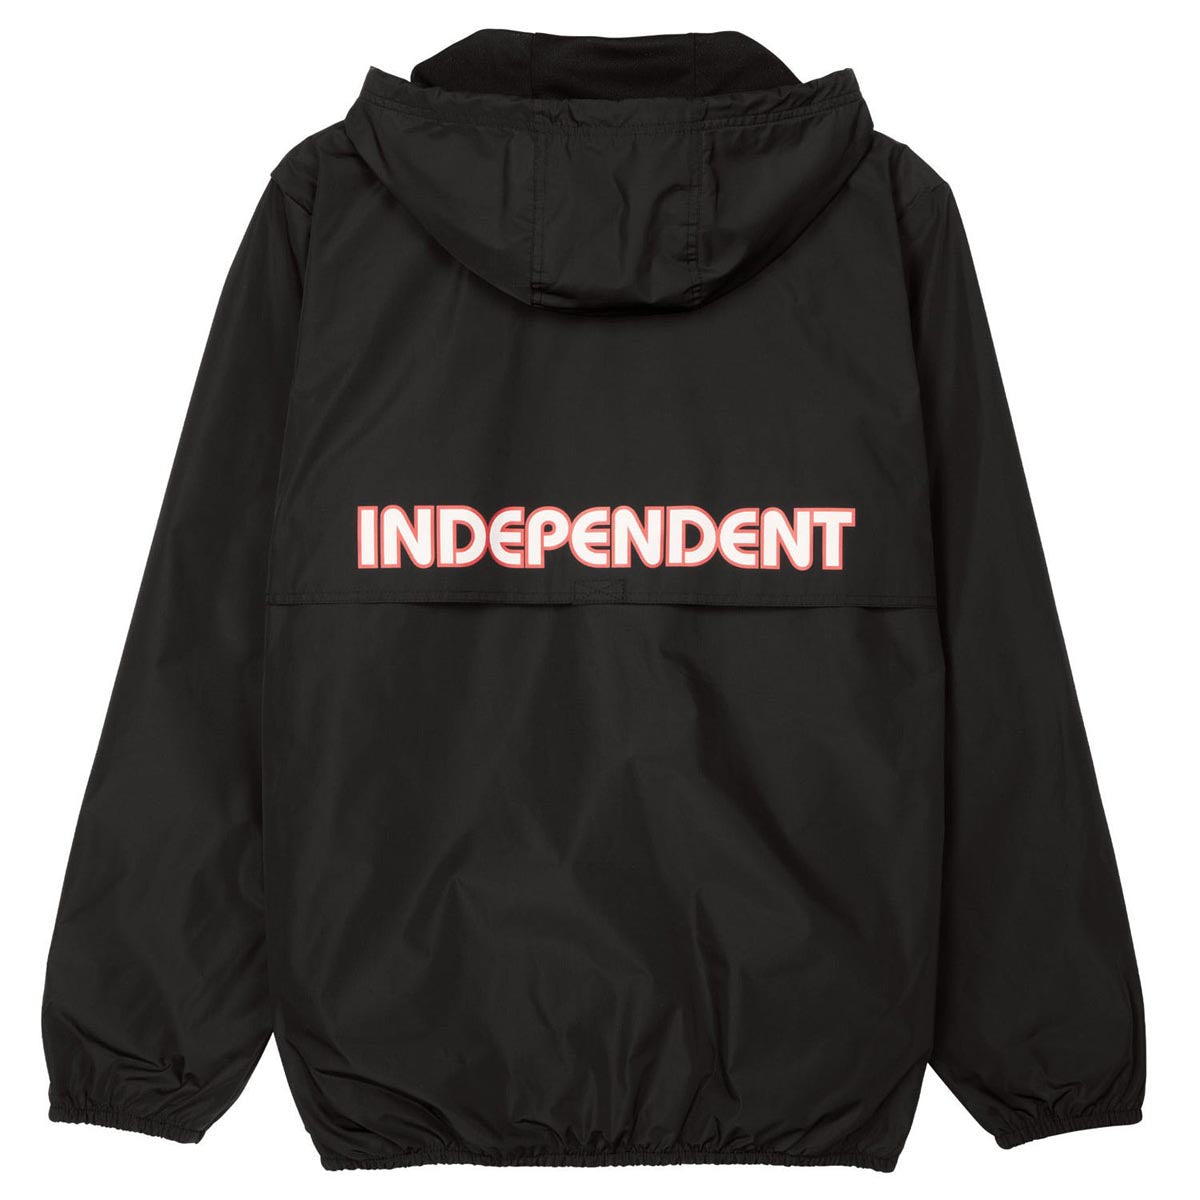 Independent Bauhaus Windbreaker Jacket - Black image 2